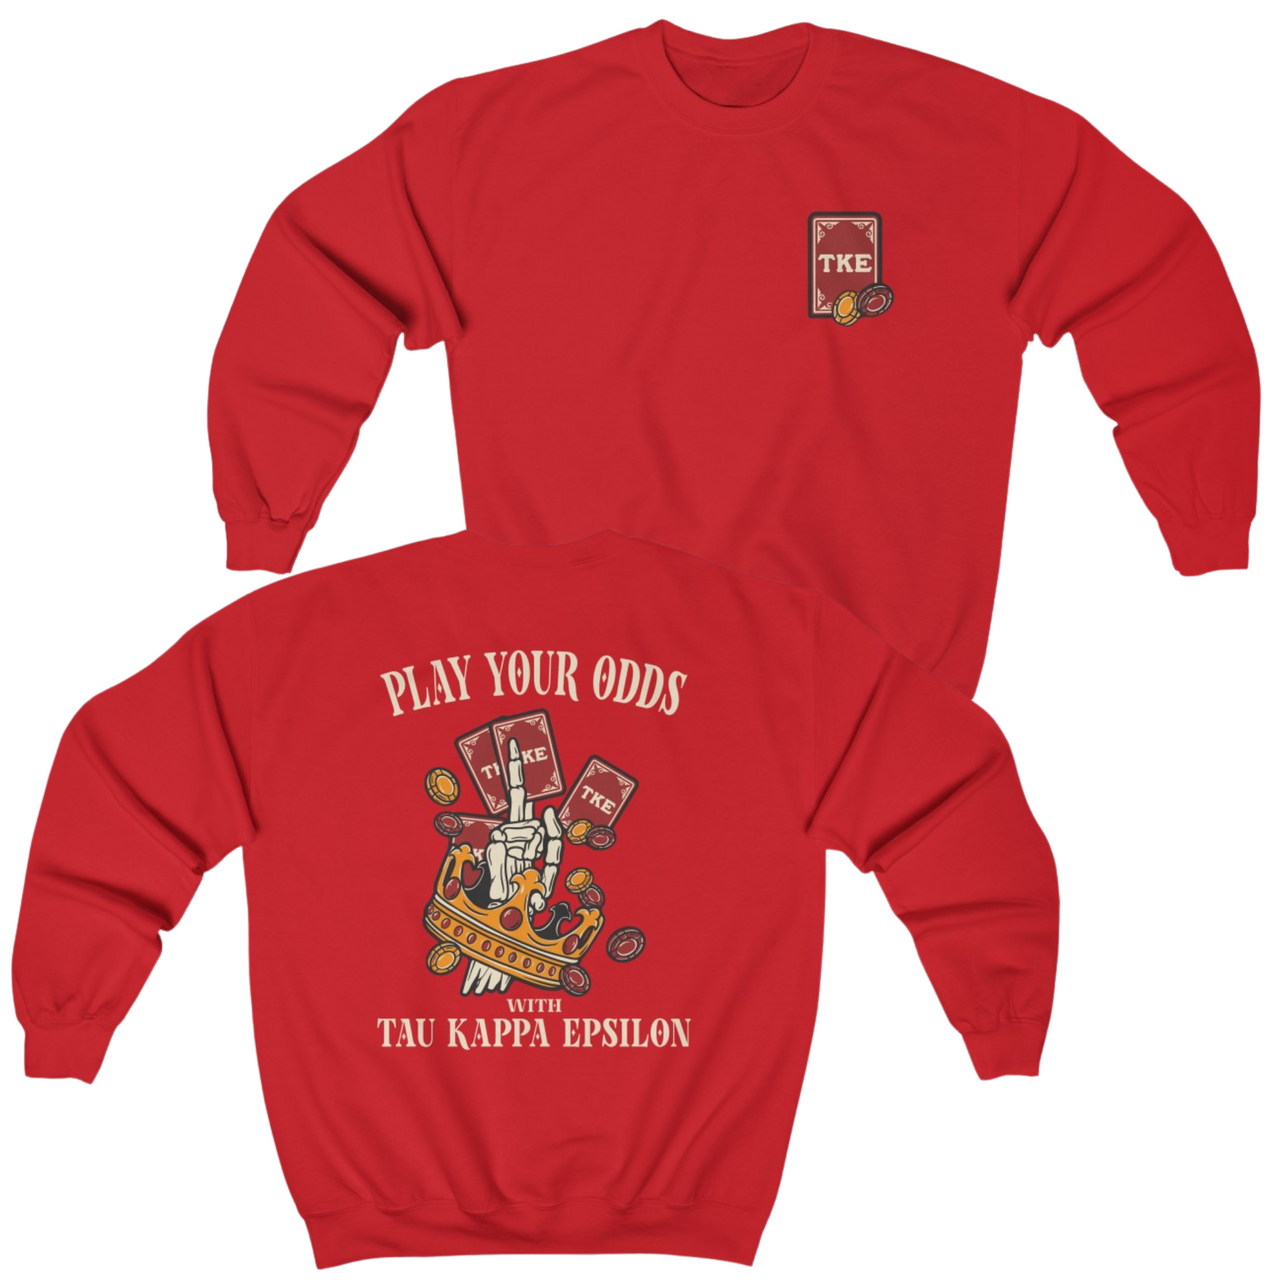 Red Tau Kappa Epsilon Graphic Crewneck Sweatshirt | Play Your Odds | TKE Clothing and Merchandise